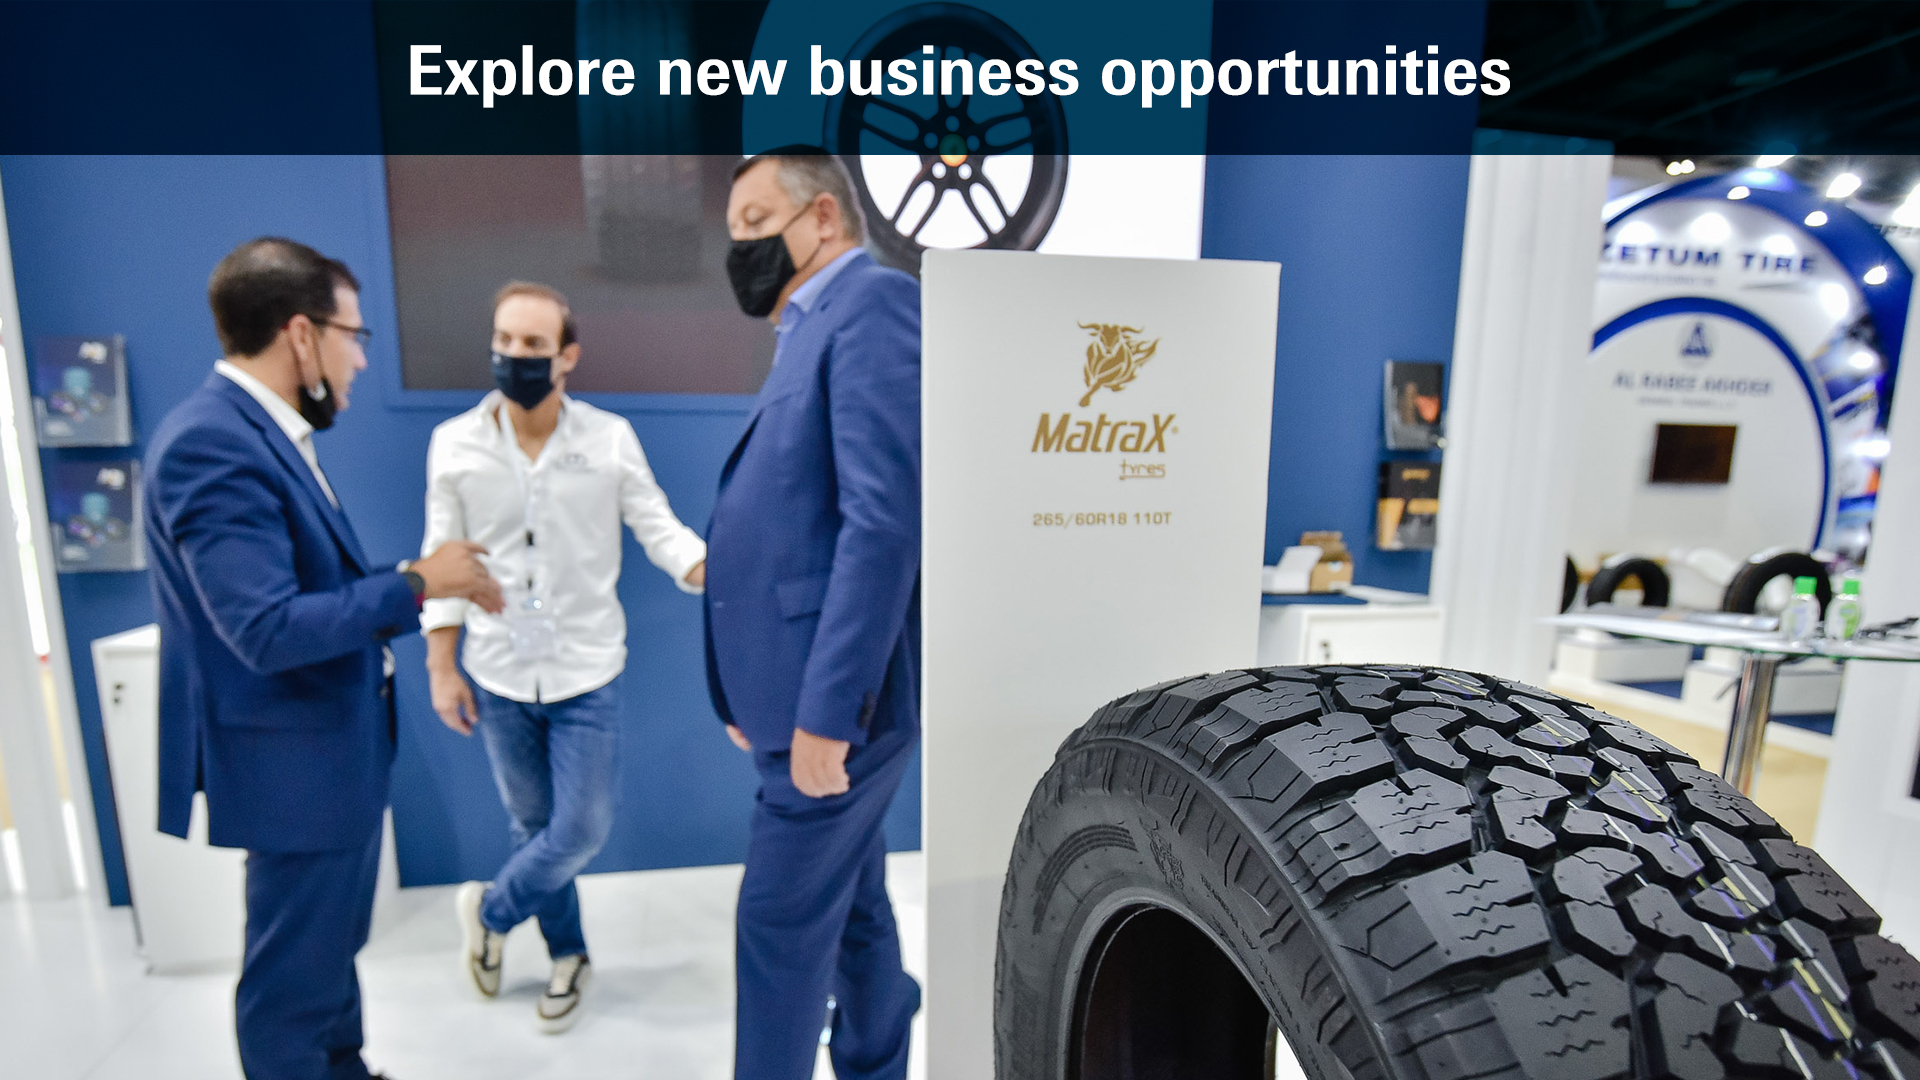 Automechanika Dubai - Explore new business opportunities